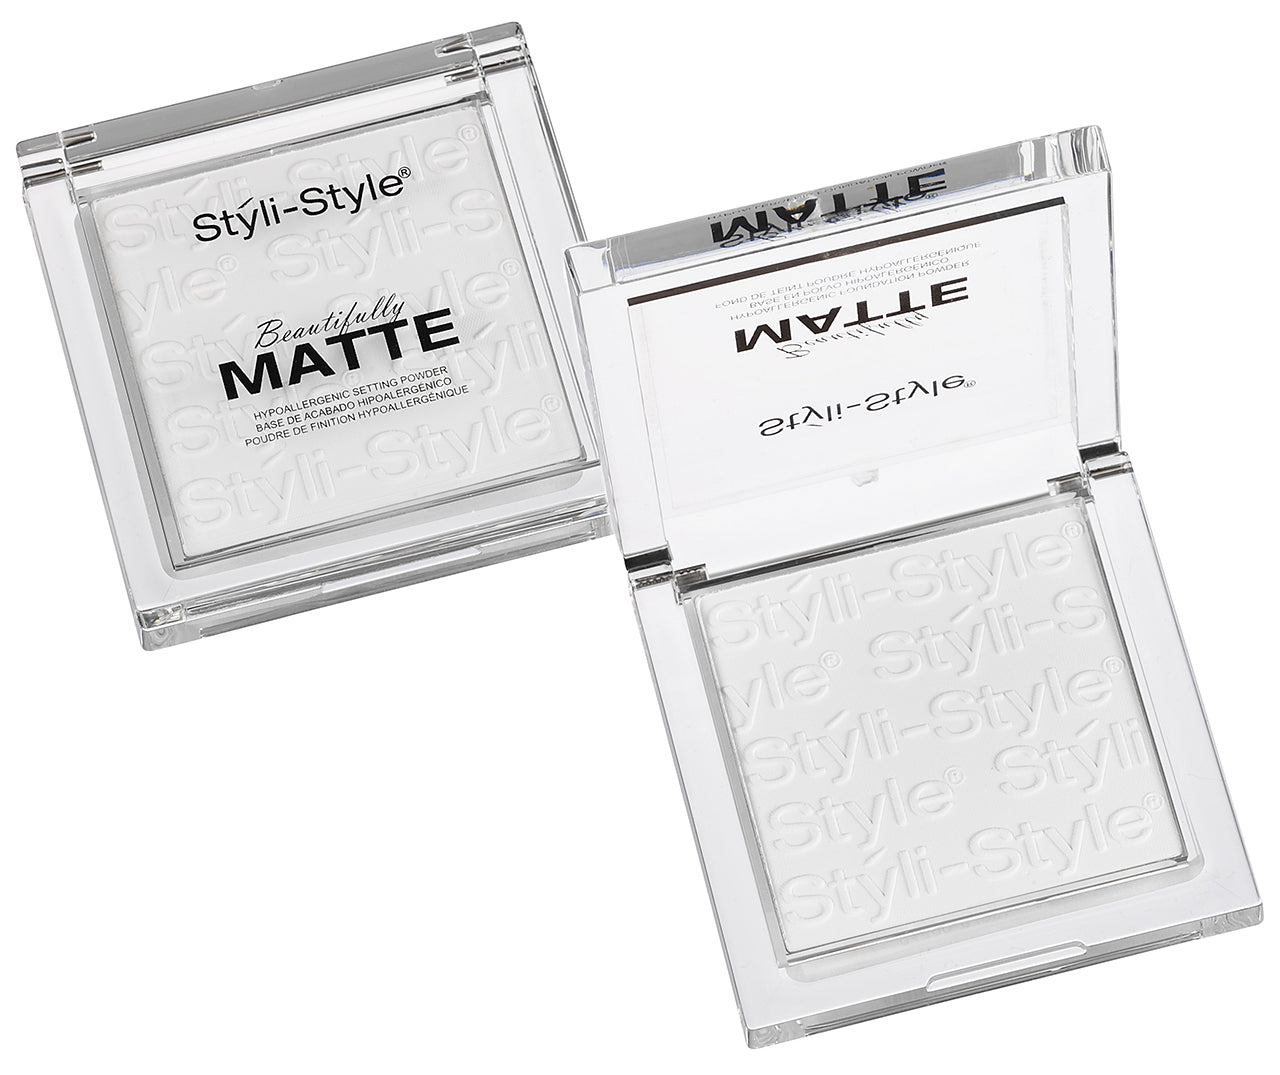 Styli-Style Cosmetics Beautifully Matte - Translucent Setting Powder - ADDROS.COM